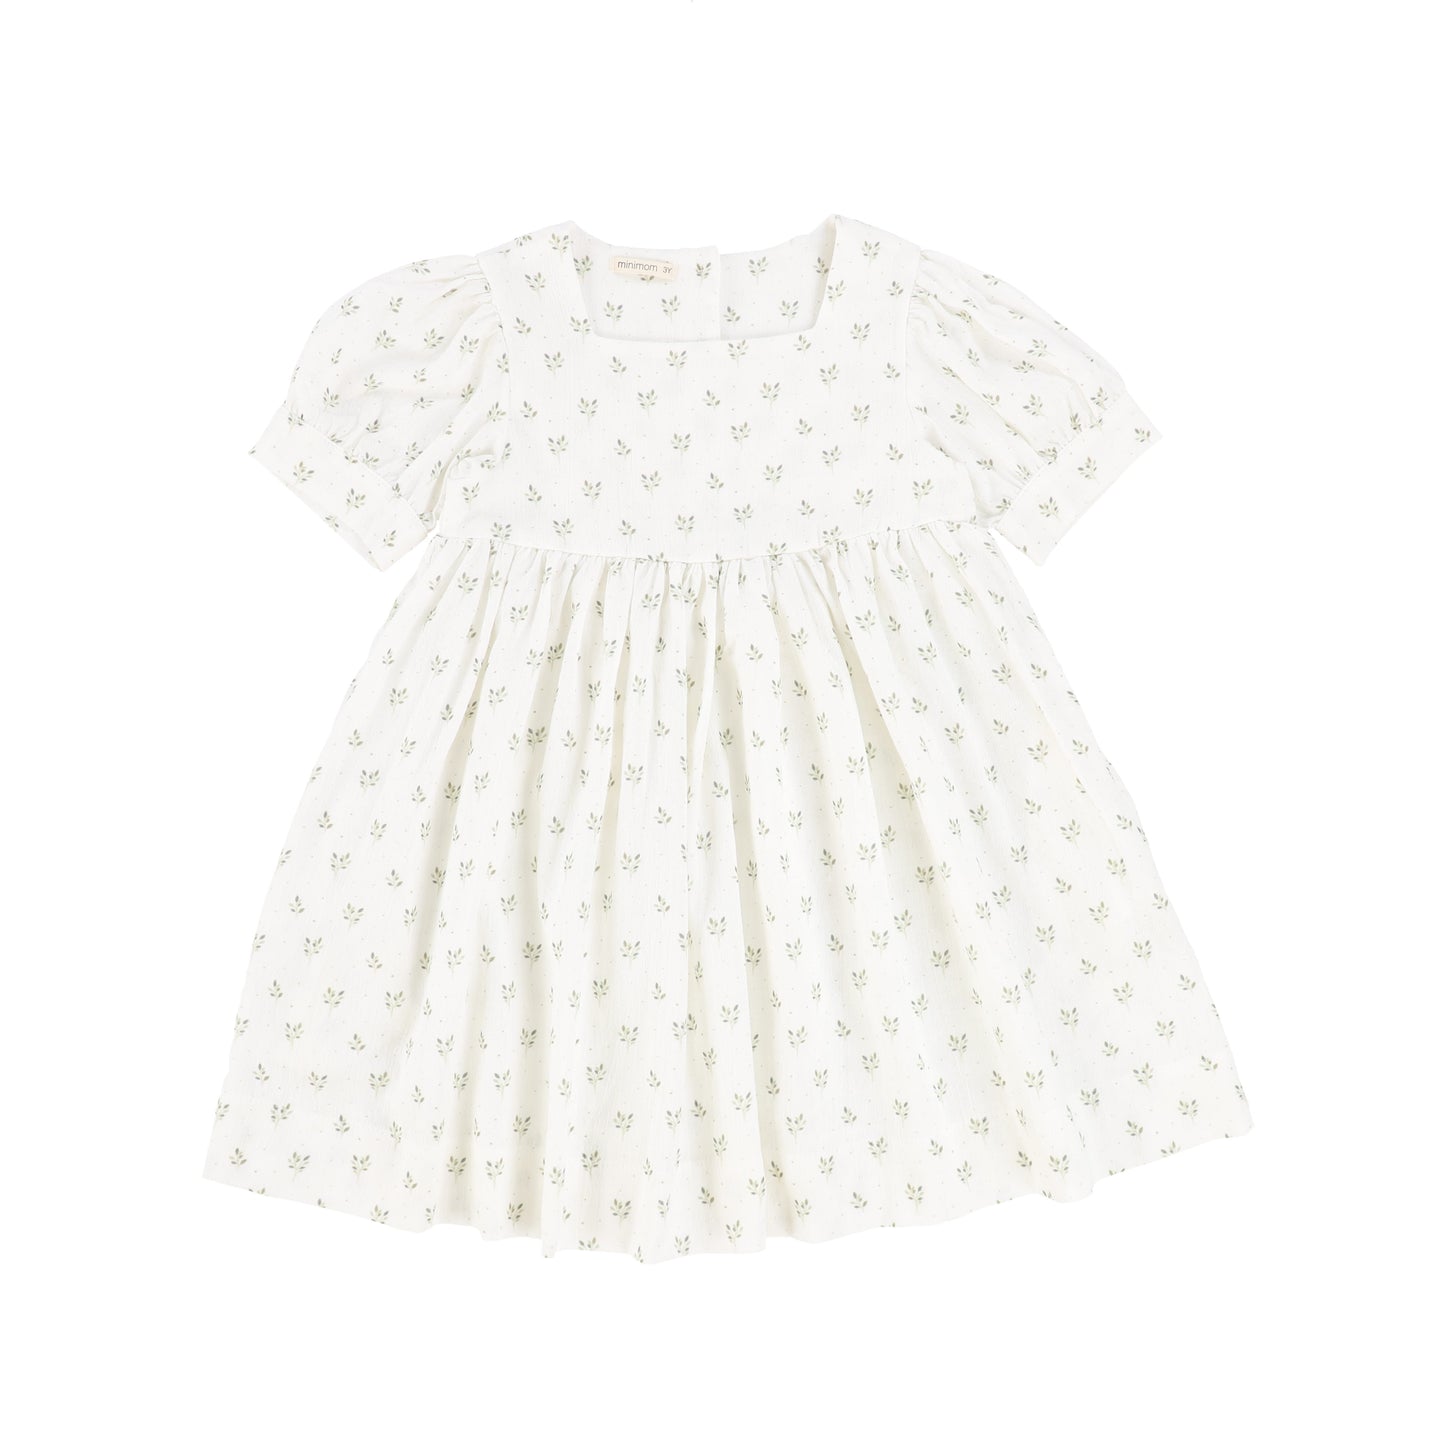 Minimom White Olive Branch Print Linen Dress [Final Sale]